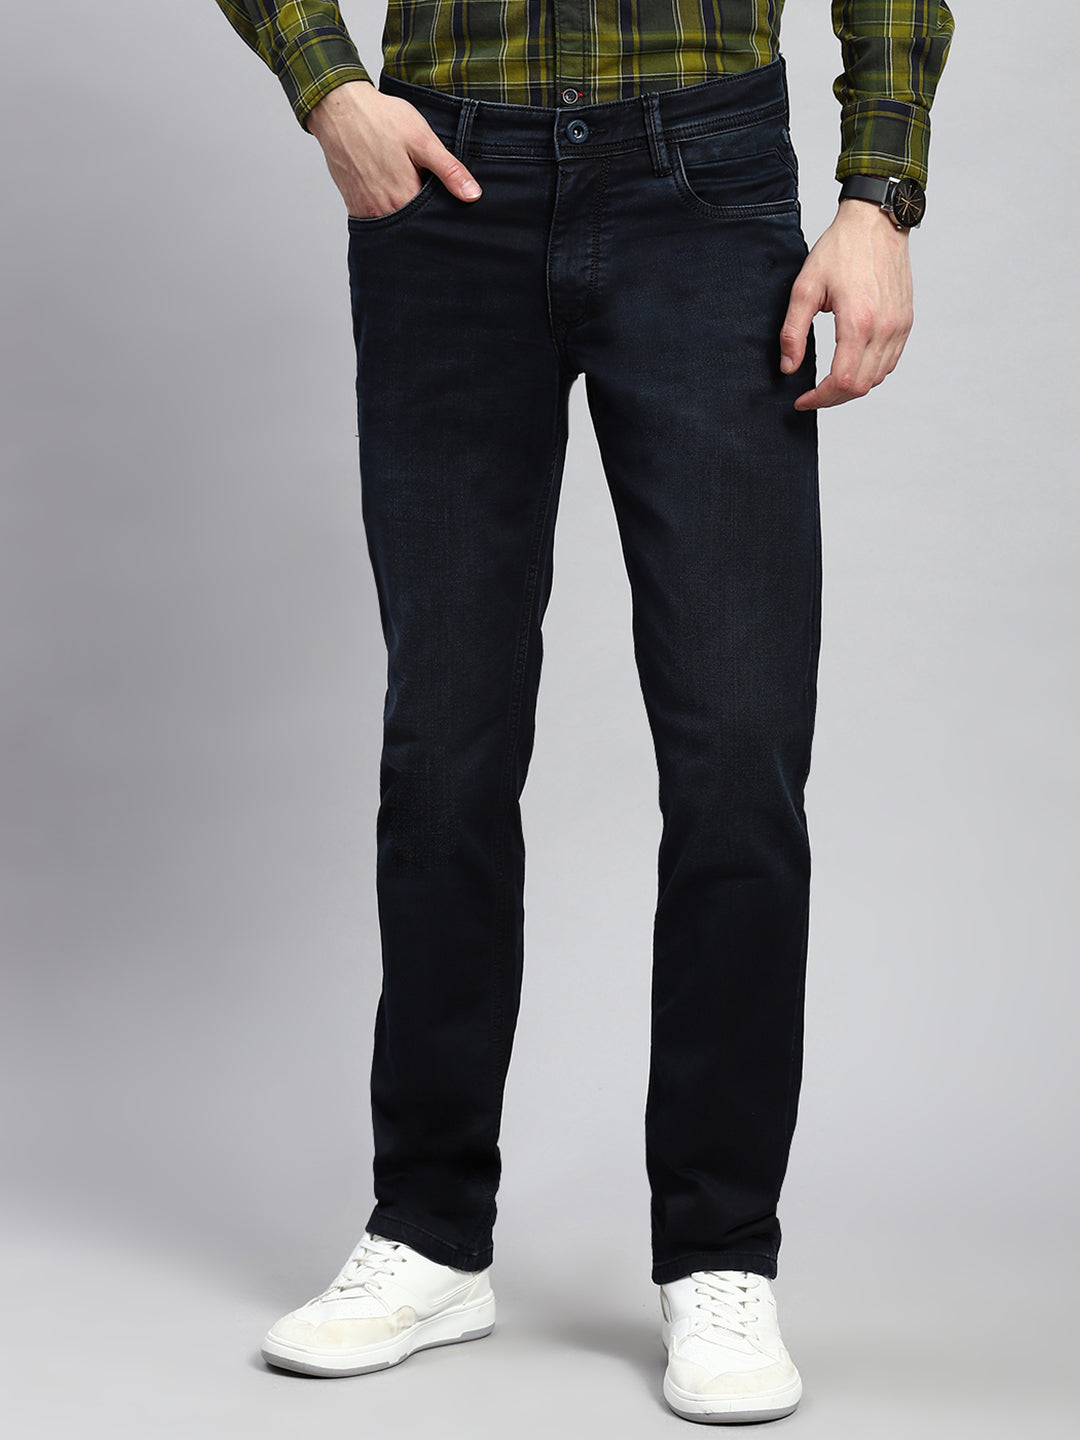 H&M Slim Fit Jeans Black Denim Tapered Leg Flat Front Mid Rise Classic Mens  33 | eBay